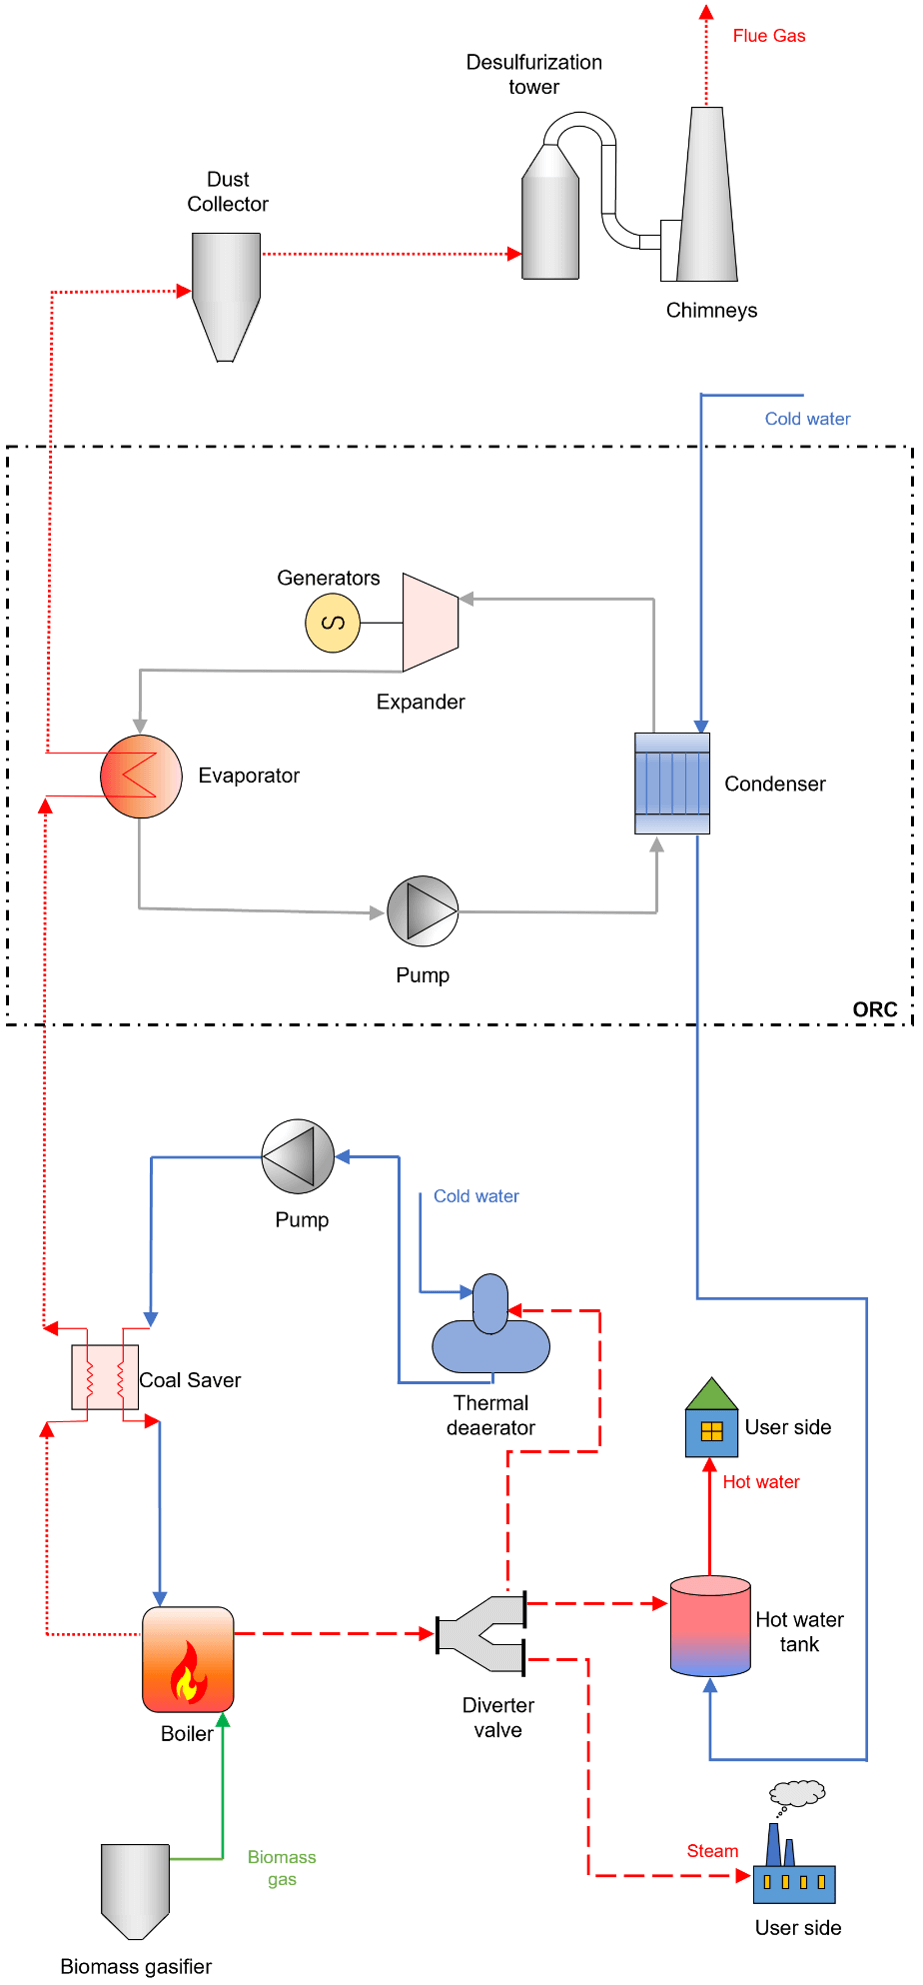 Simulation Analysis of Flue Gas Waste Heat Utilization Retrofit Based on ORC System